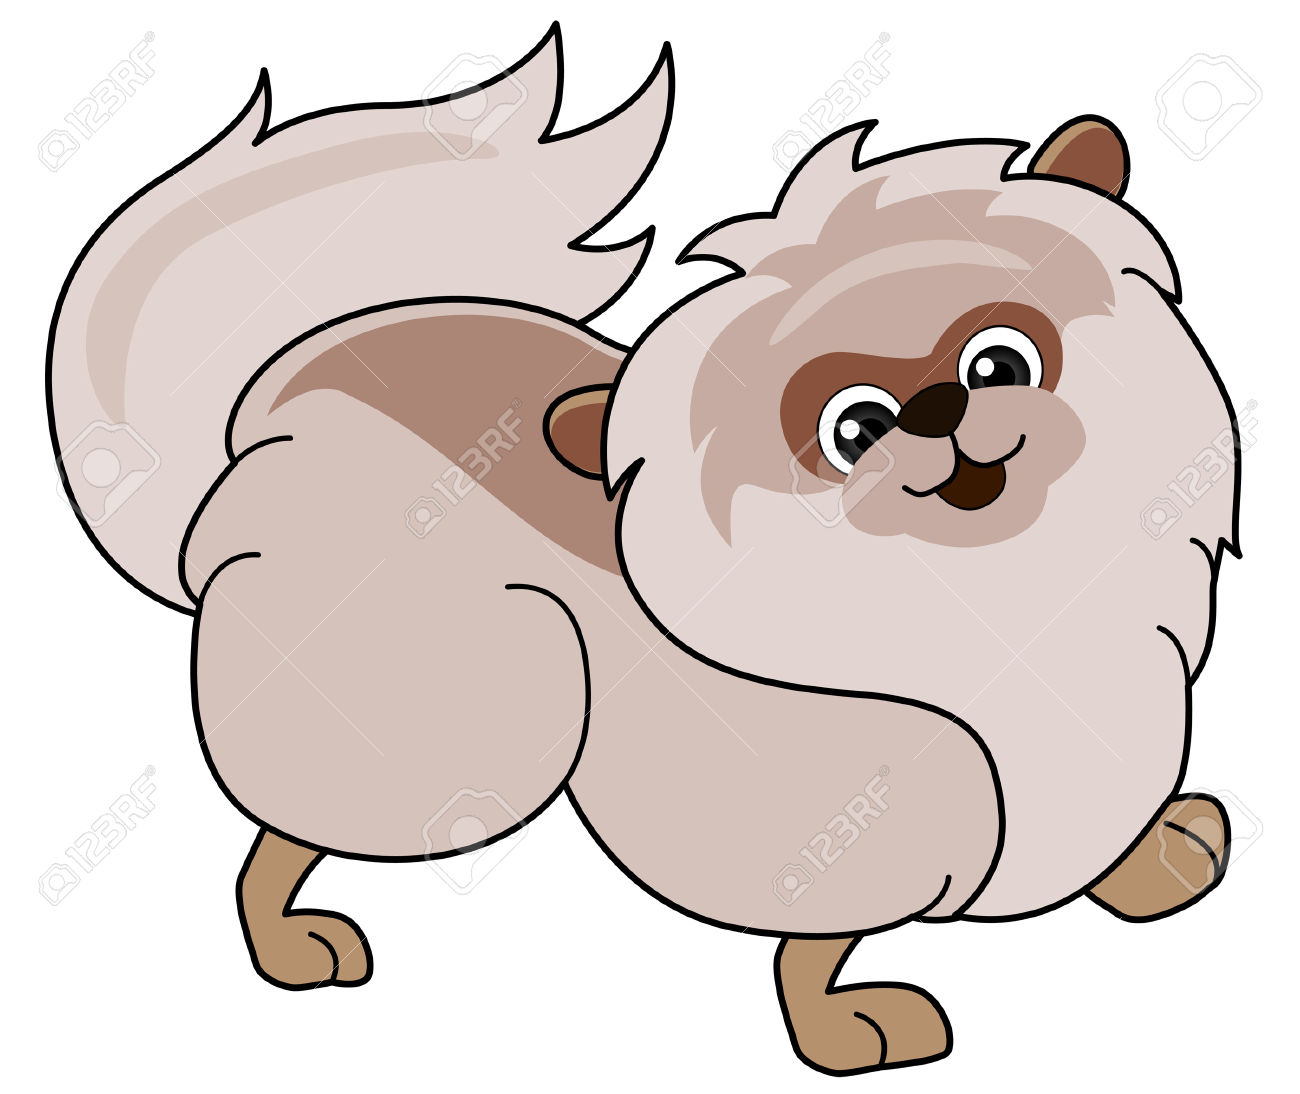 Pomeranian clipart #1, Download drawings